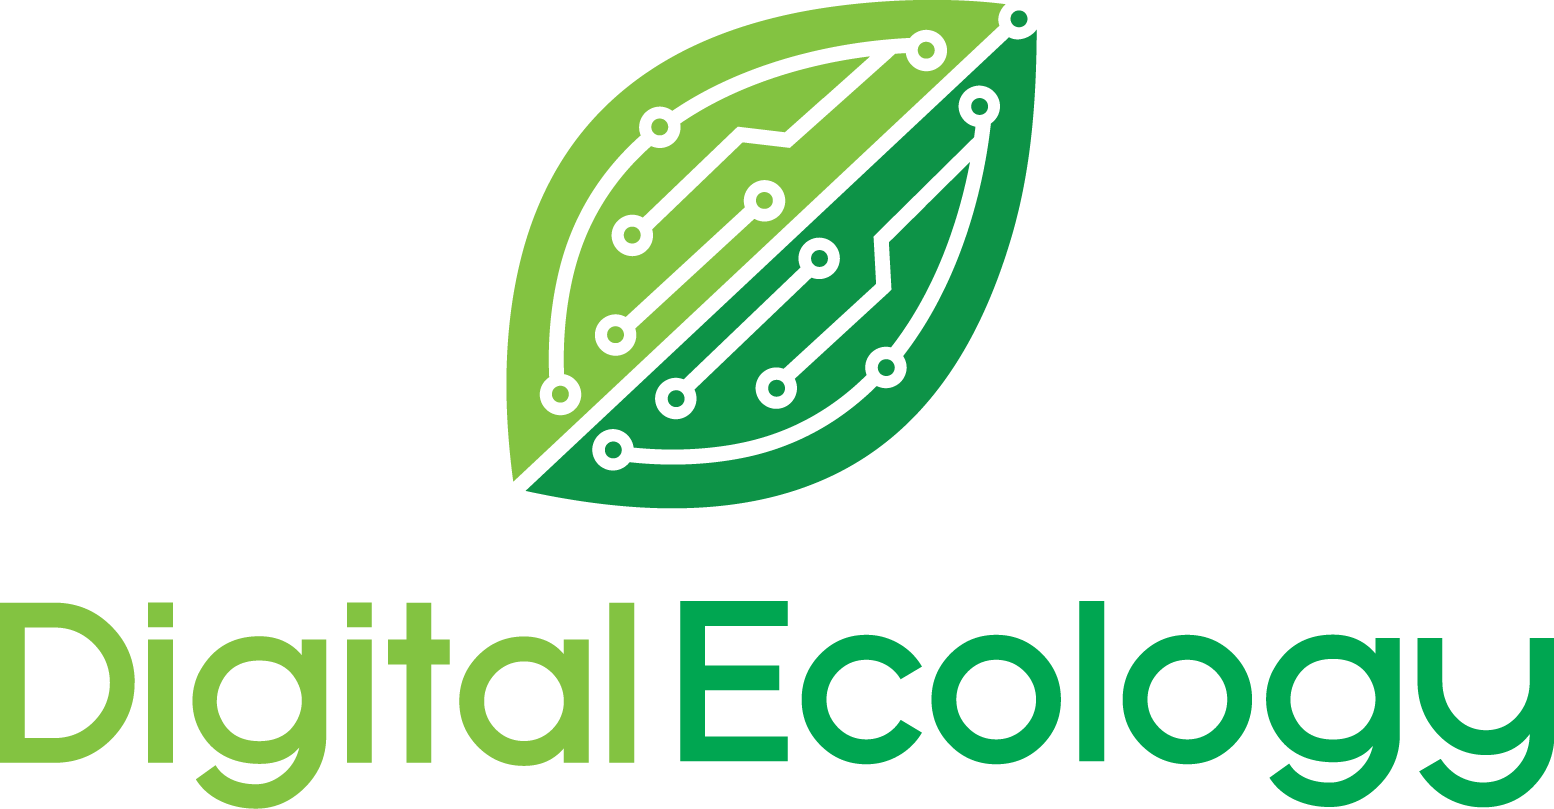 Digital Ecology Limited